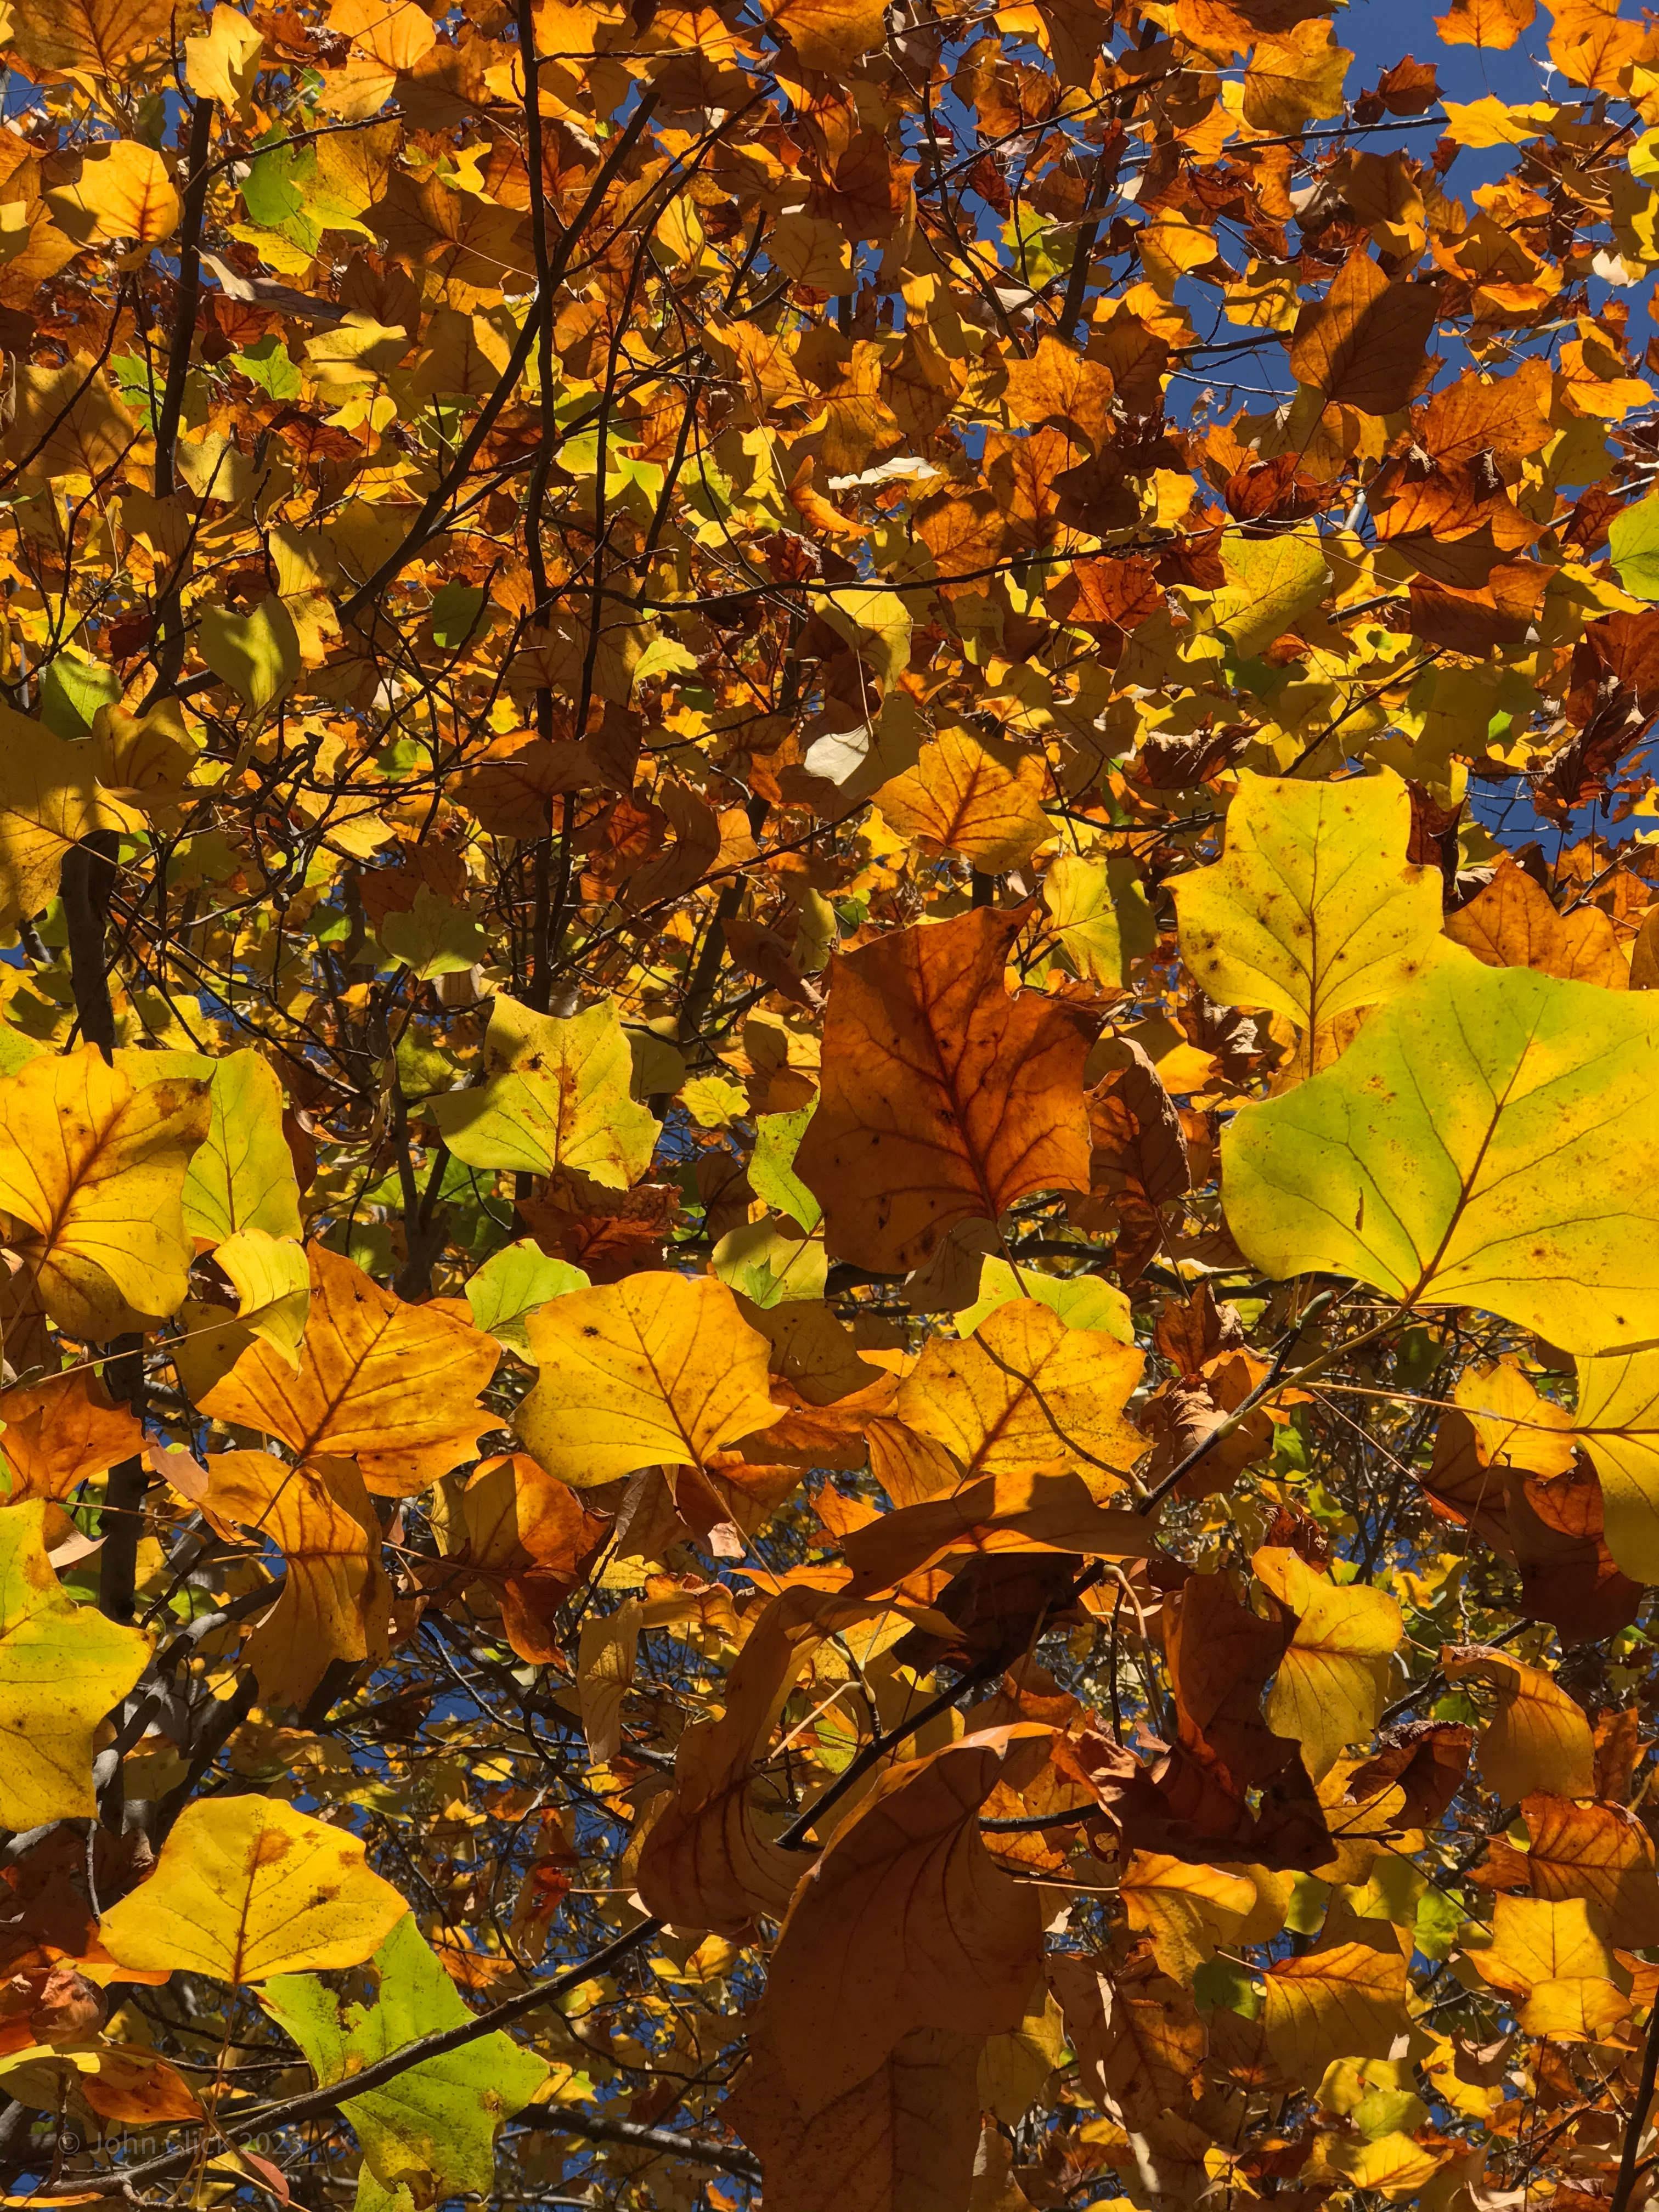 Autumn: A Leafy Tapestry ©John Click